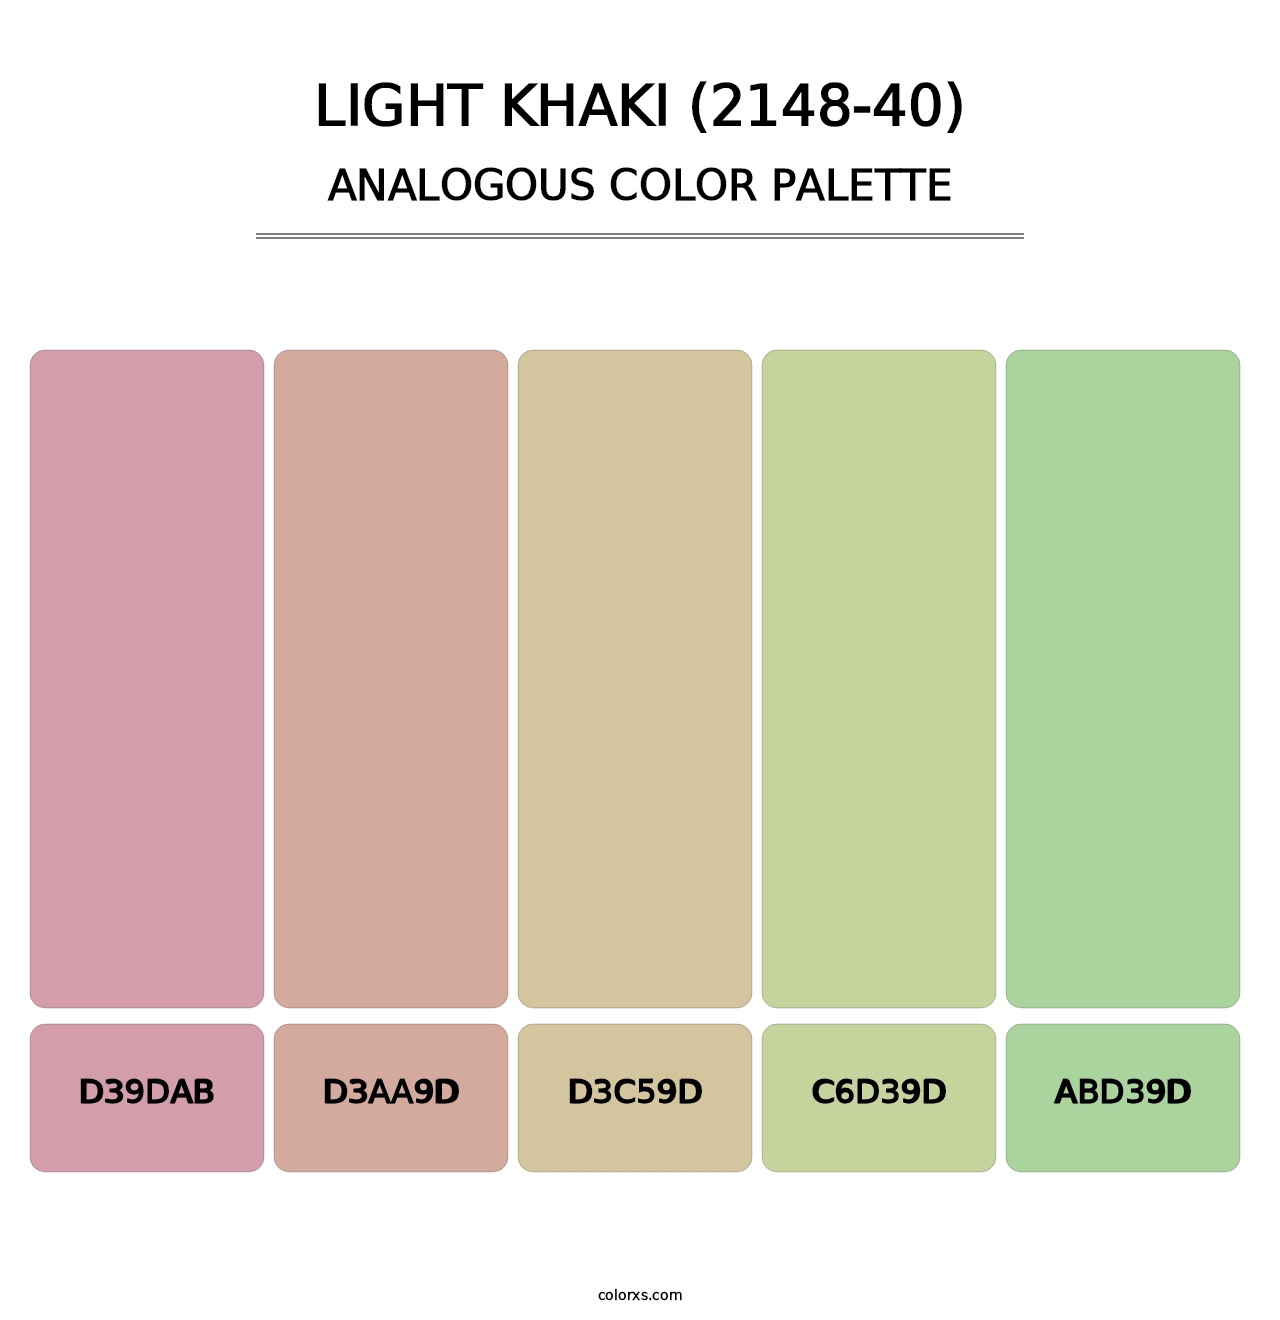 Light Khaki (2148-40) - Analogous Color Palette